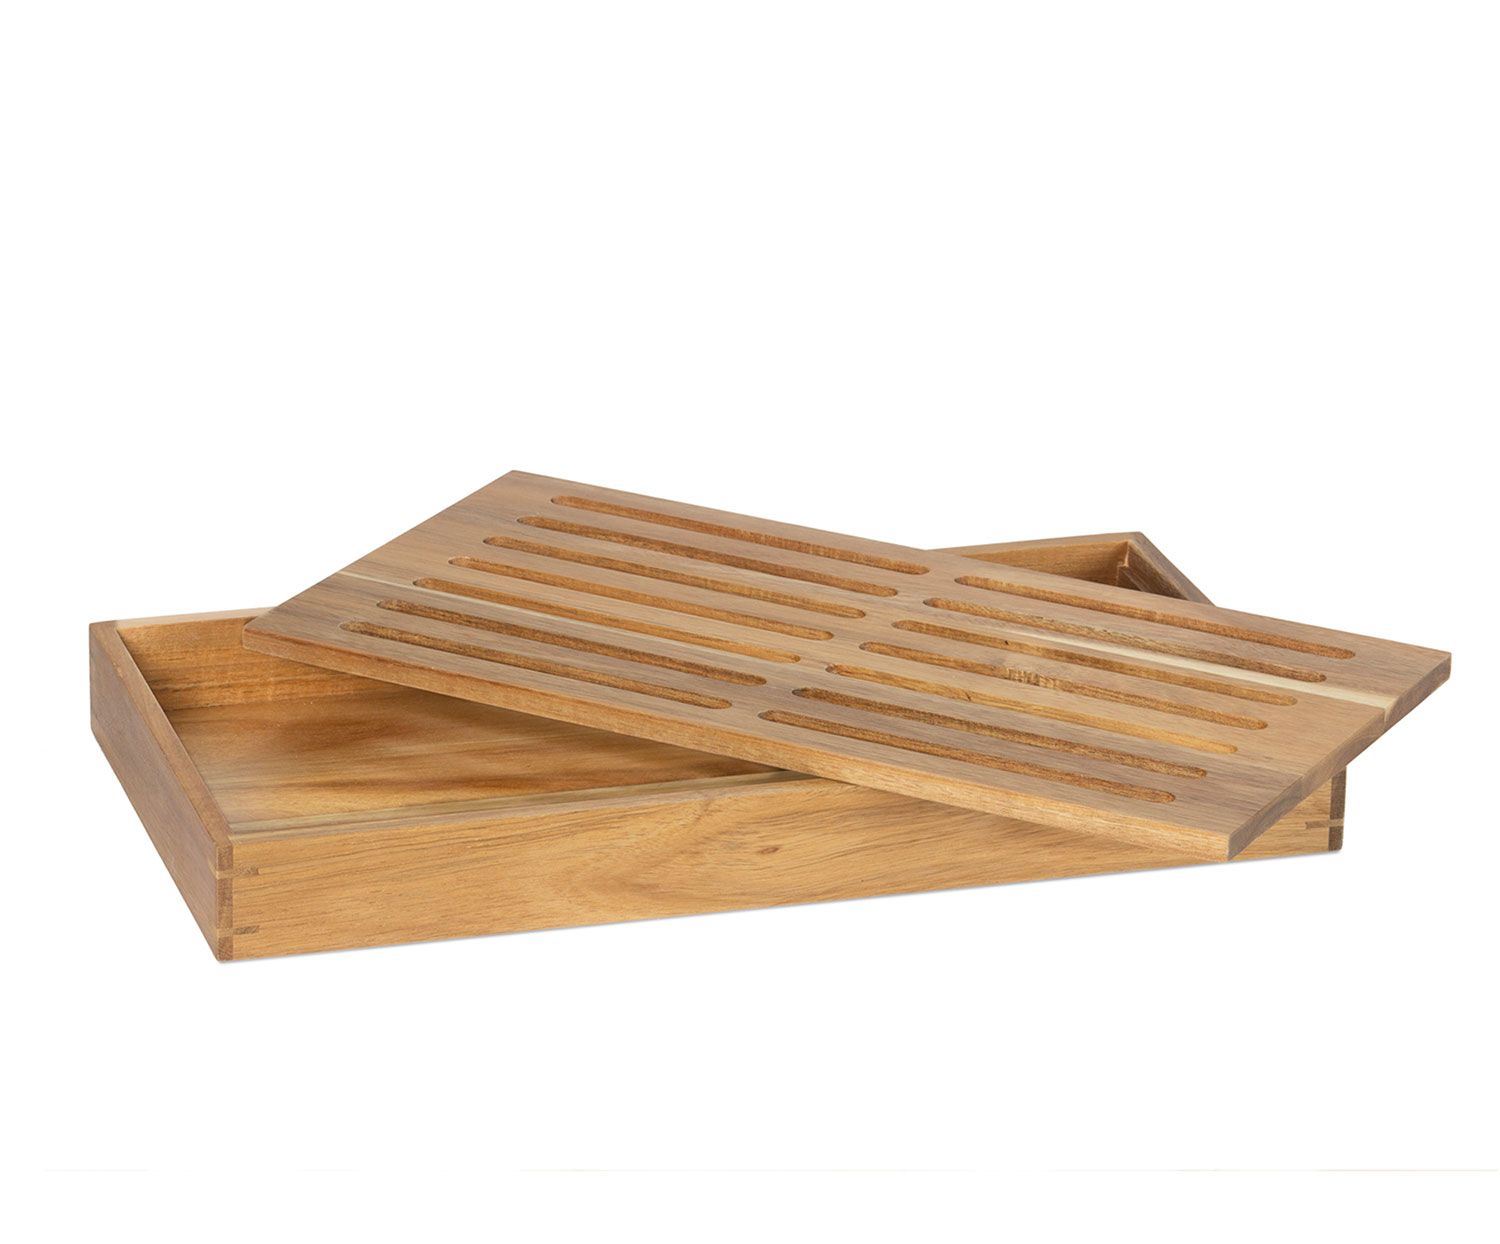 Tradineur - Tabla para cortar pan de madera 2.5 x 32 x 22 cm con